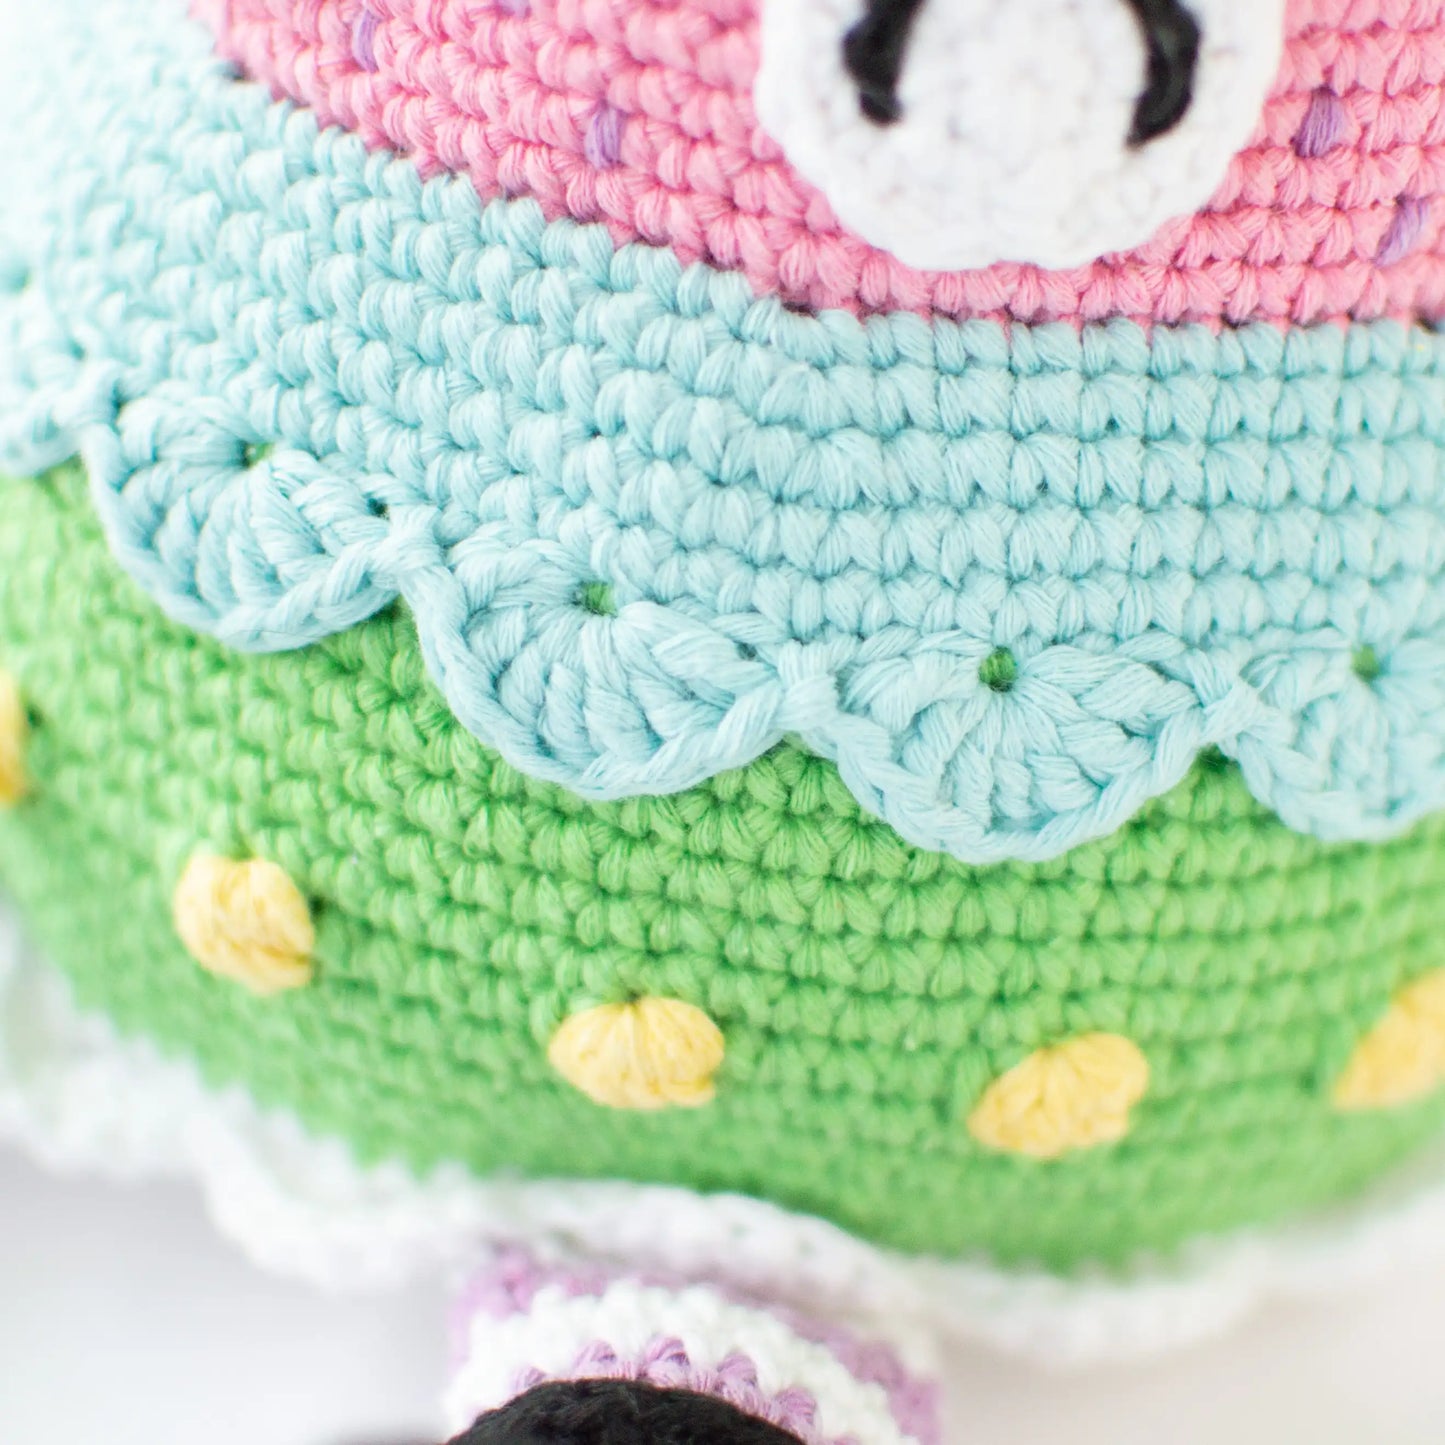 Birthday Cake | Crochet amigurumi PDF pattern